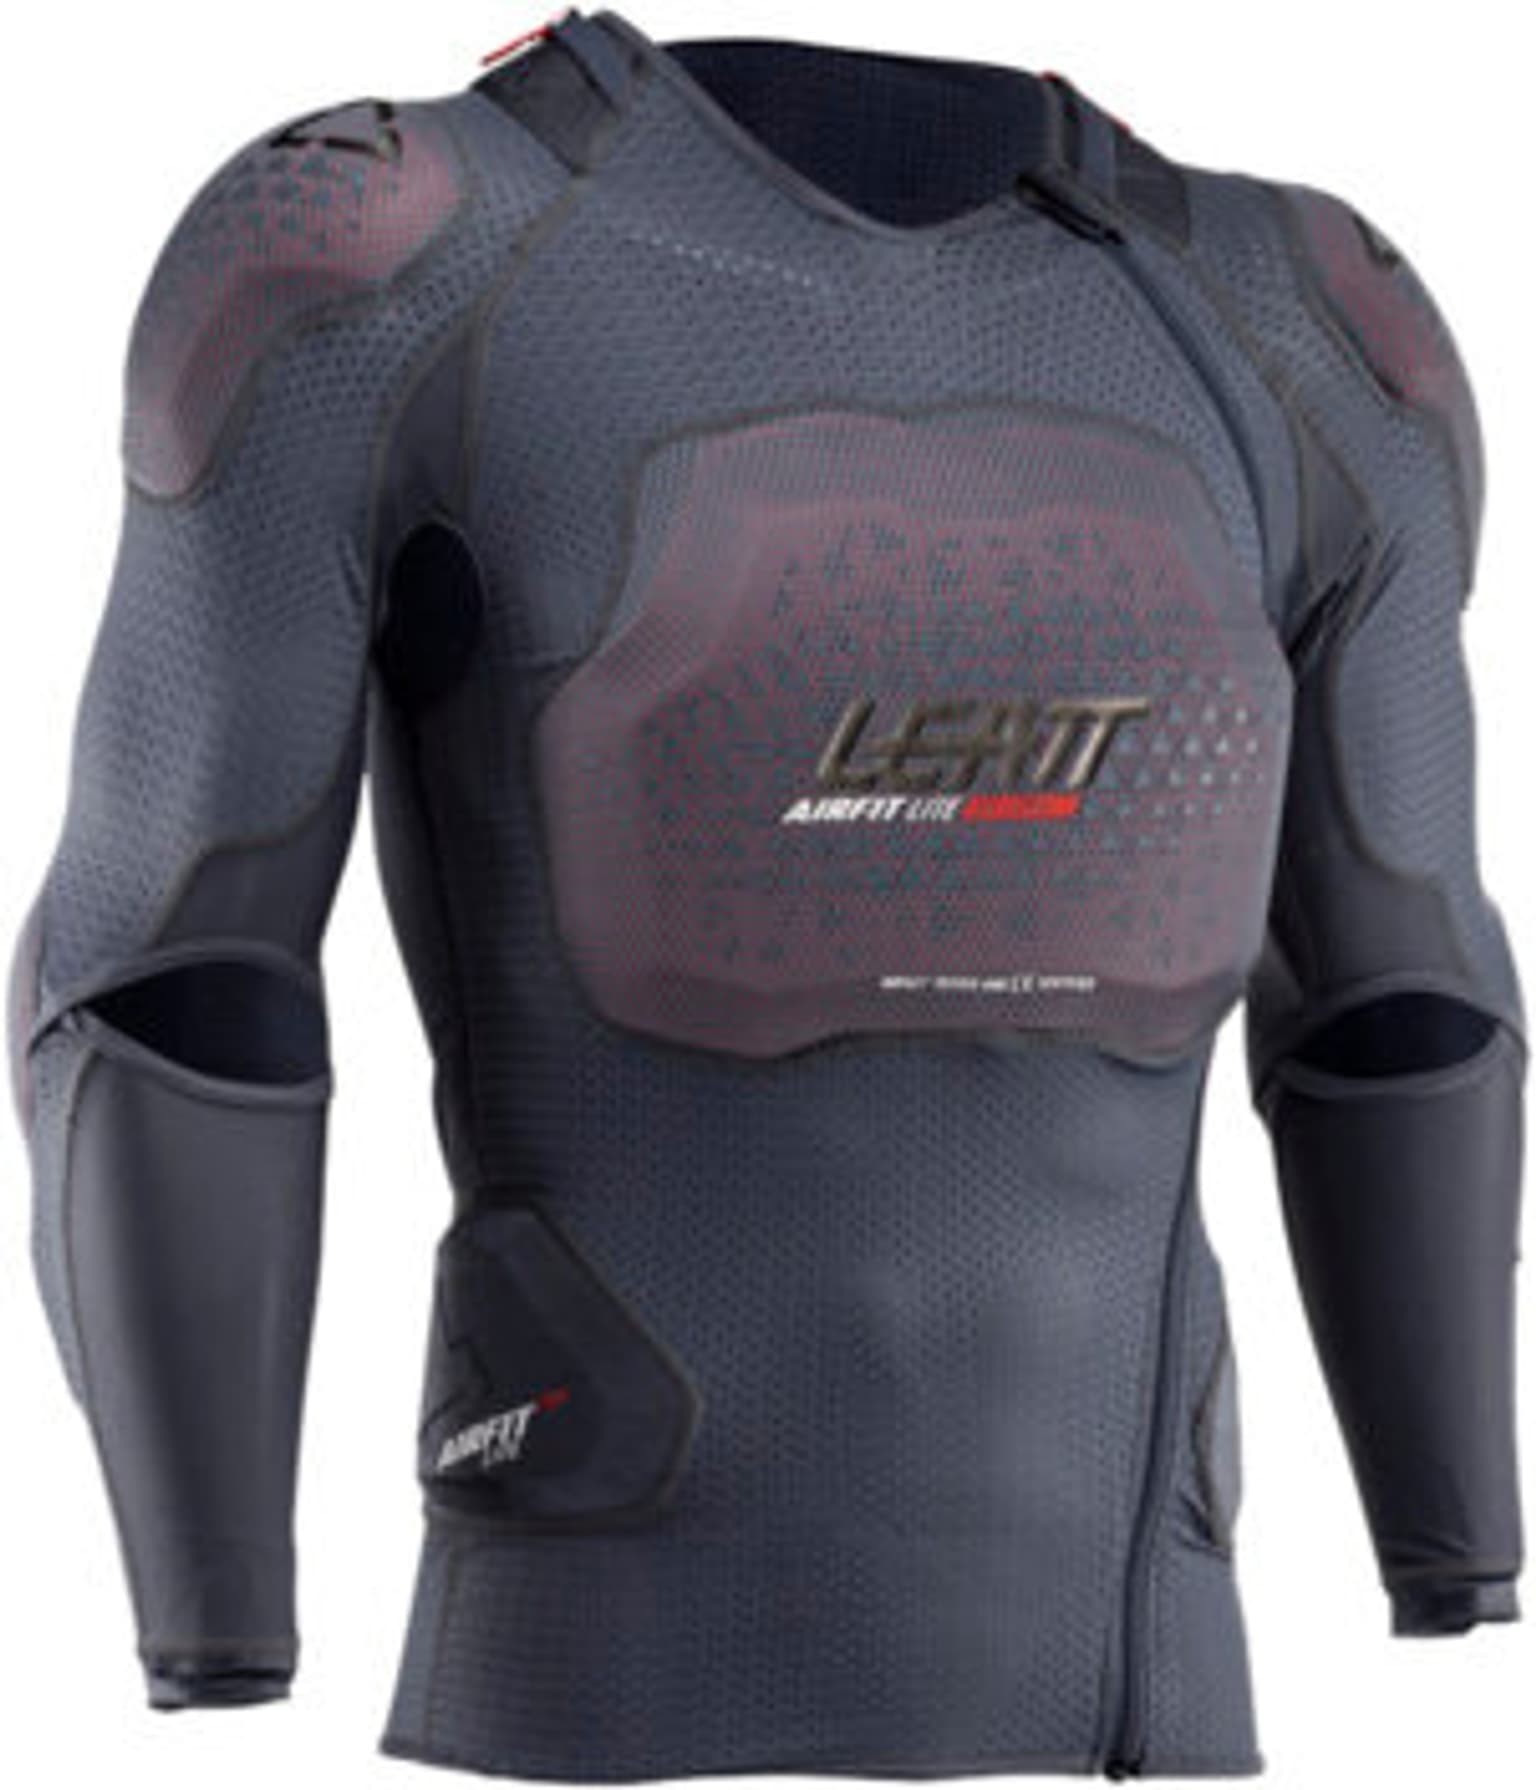 Leatt Leatt 3DF Body Protector Airfit lite Evo Protektoren noir 1